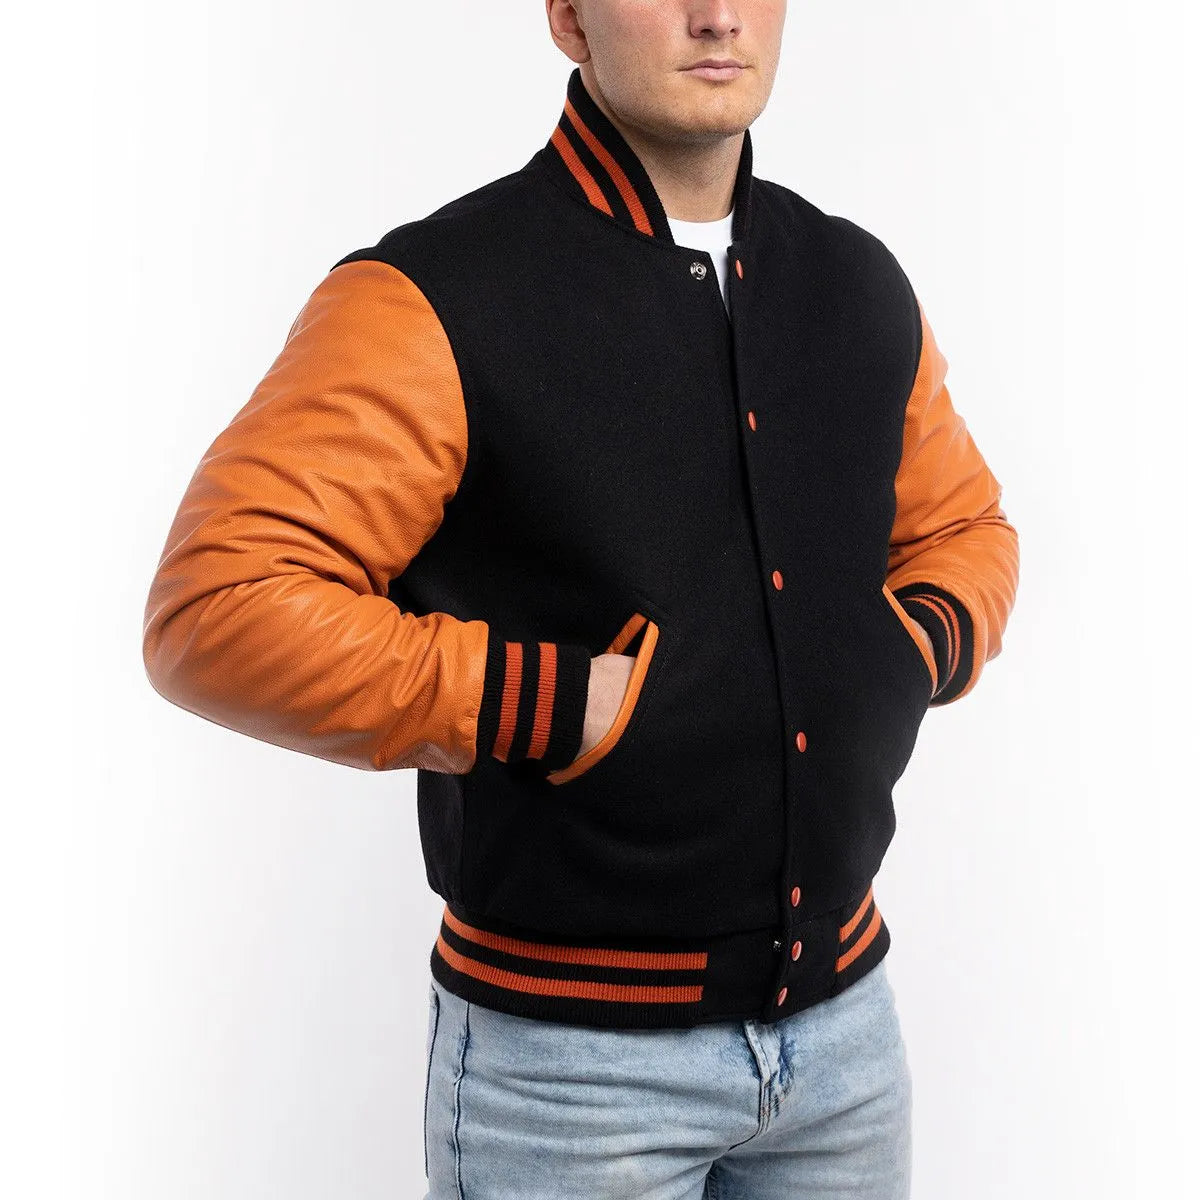 Mens-Black-and-Orange-Varsity-Jacket-Front